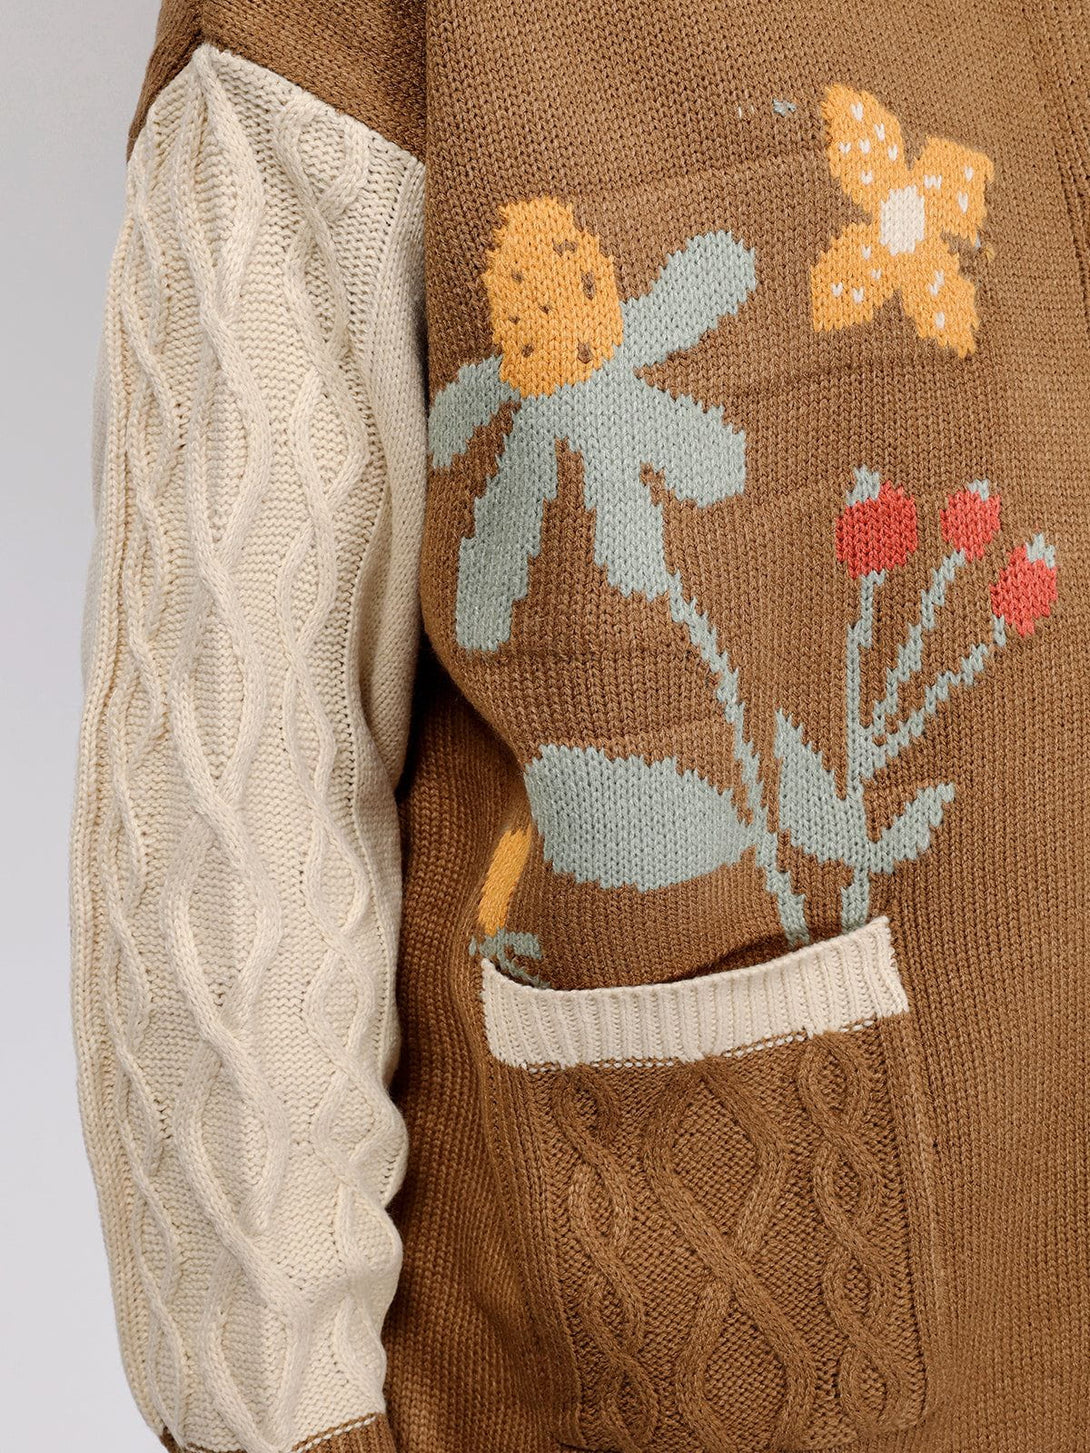 Majesda® - Flowers Knit Polo Cardigan outfit ideas streetwear fashion